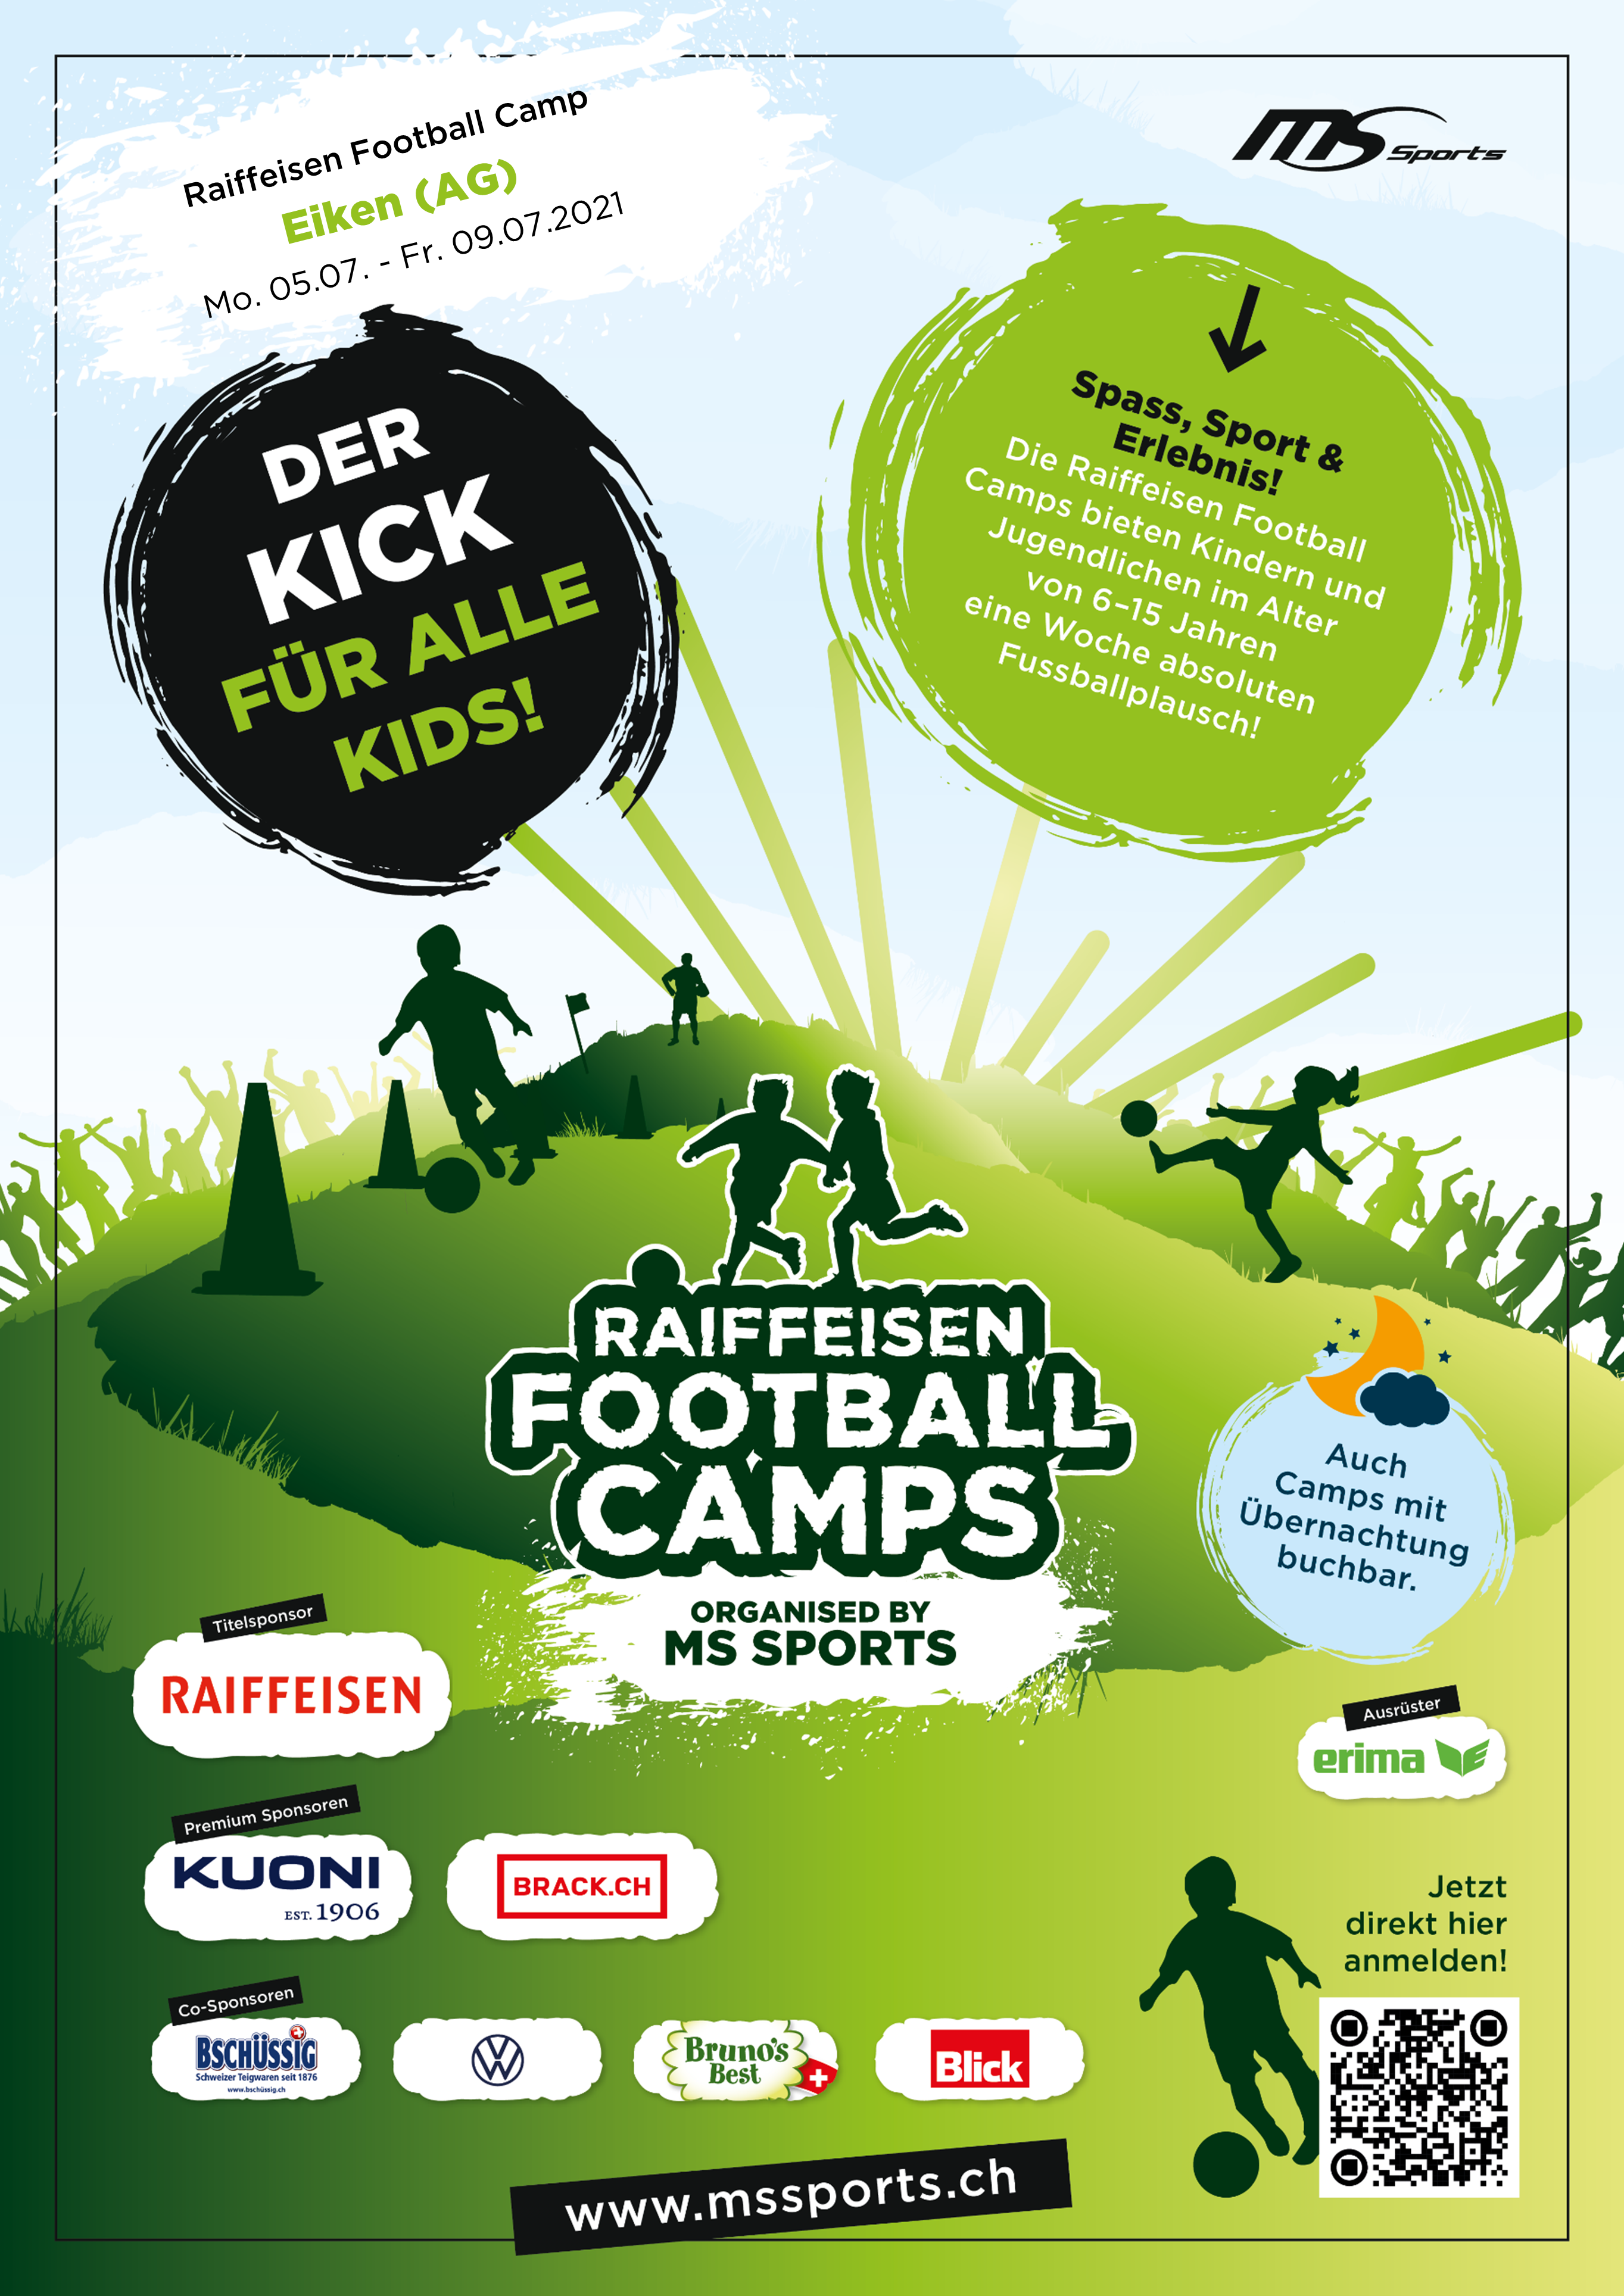 Raiffeisen Football Camp 2021